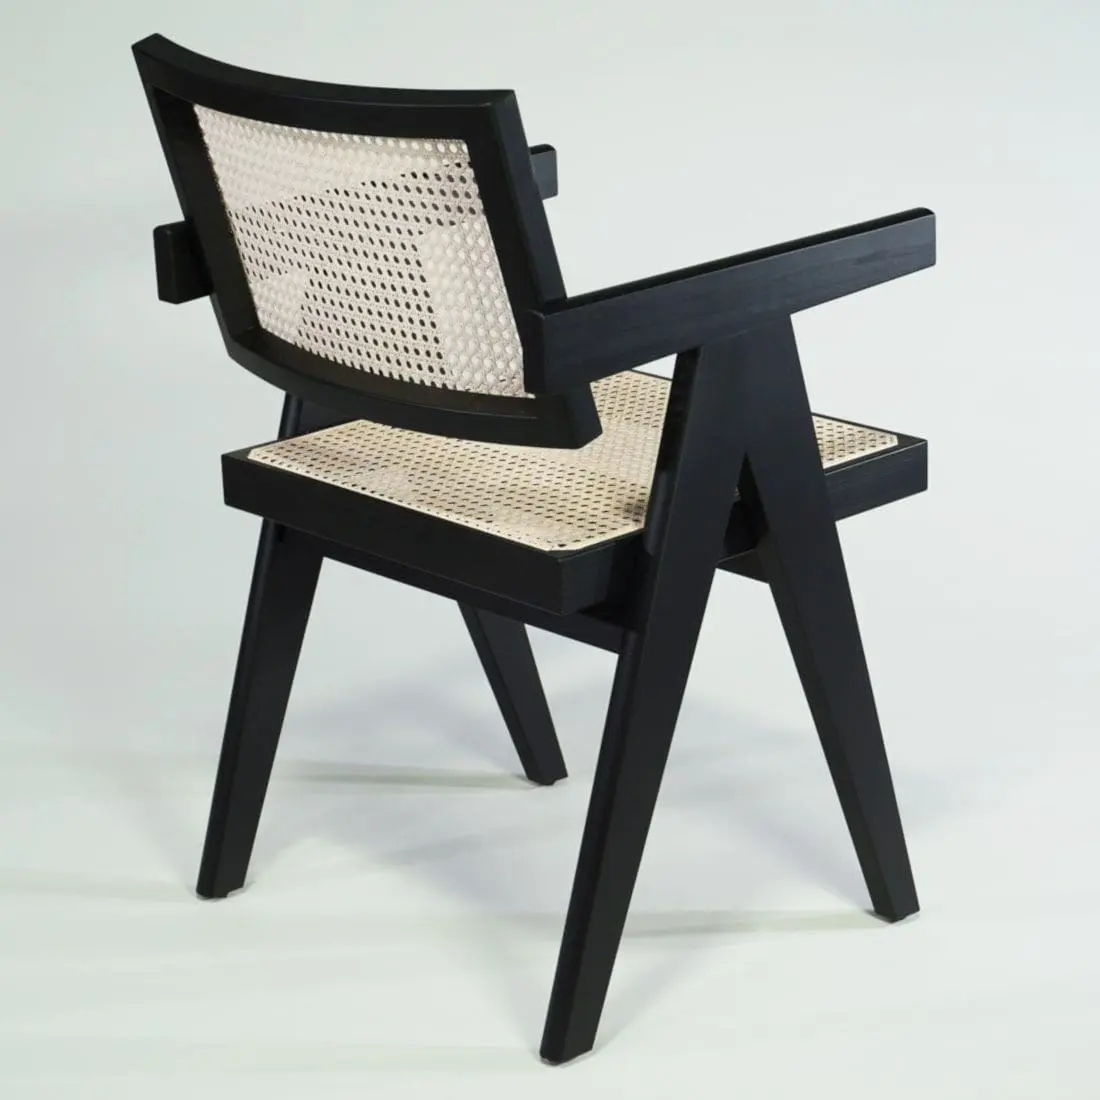 Jeanneret Stuhl mit Armlehnen schwarzes Holz, Vintage Mid Century Design Klassiker